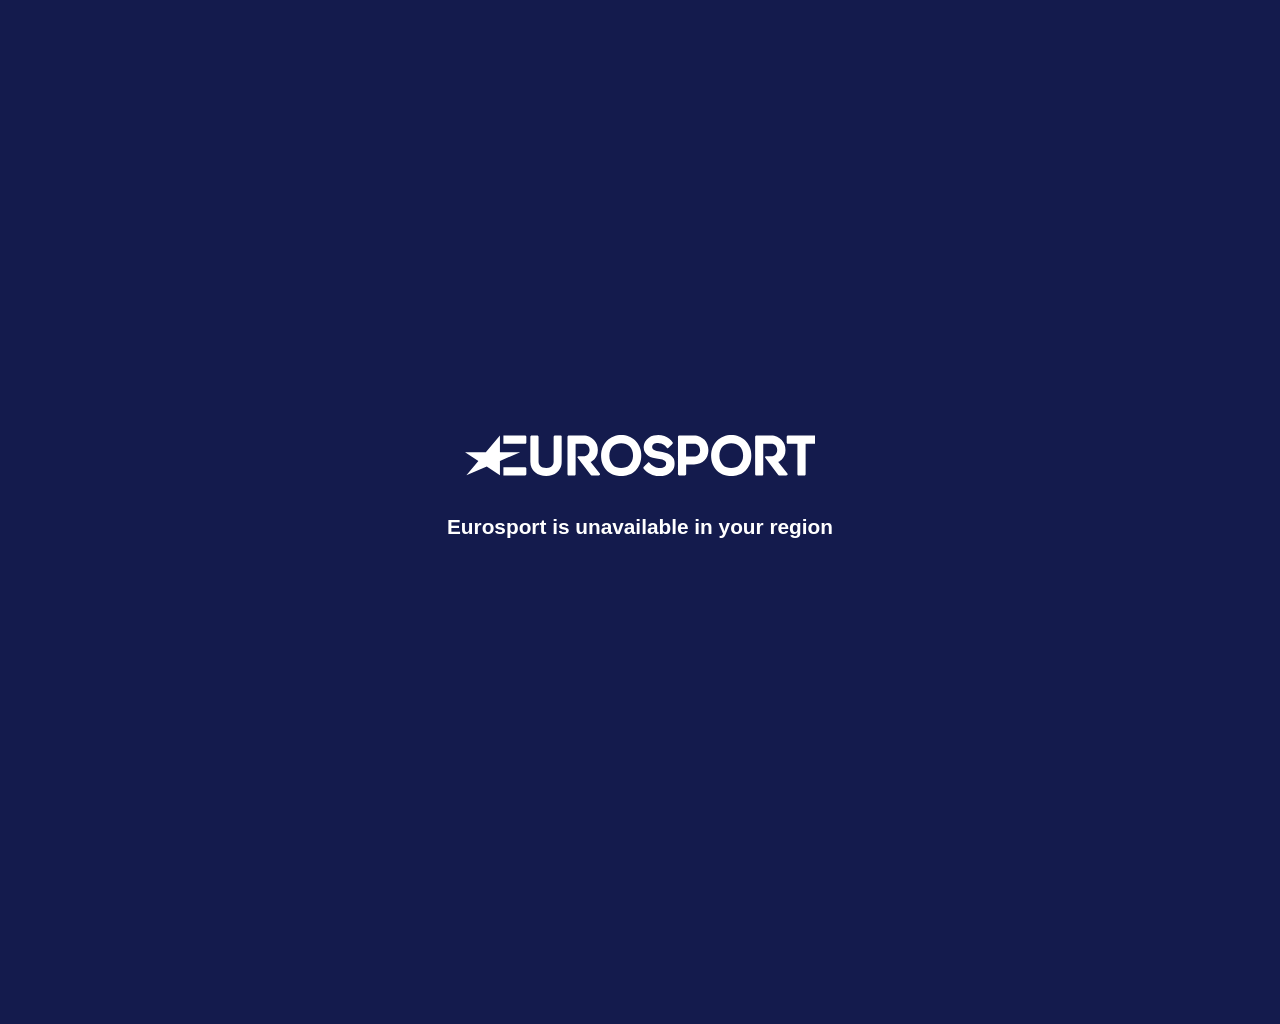 eurosport.se